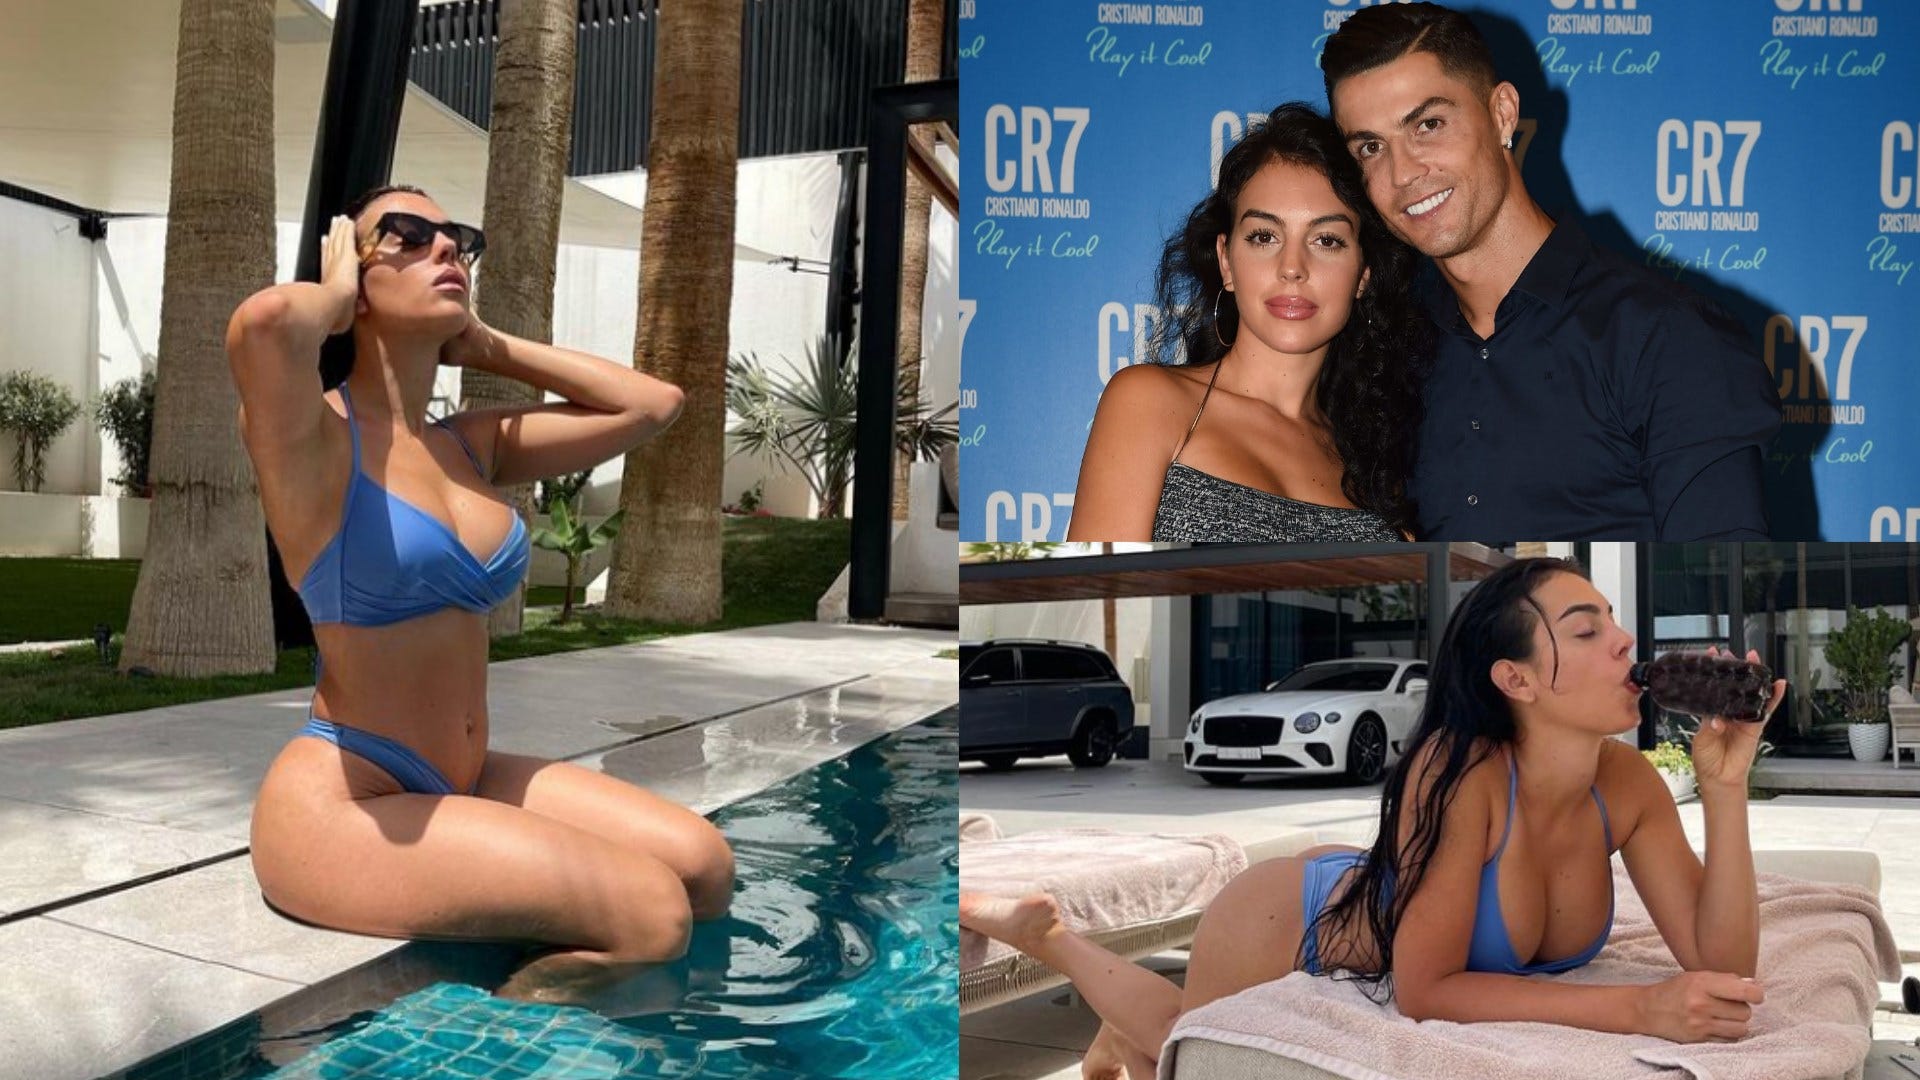 Cristiano Ronaldos girlfriend Georgina Rodriguez posts racy bikini pictures on Instagram as she risks breaking strict Saudi Arabian law Goal US photo